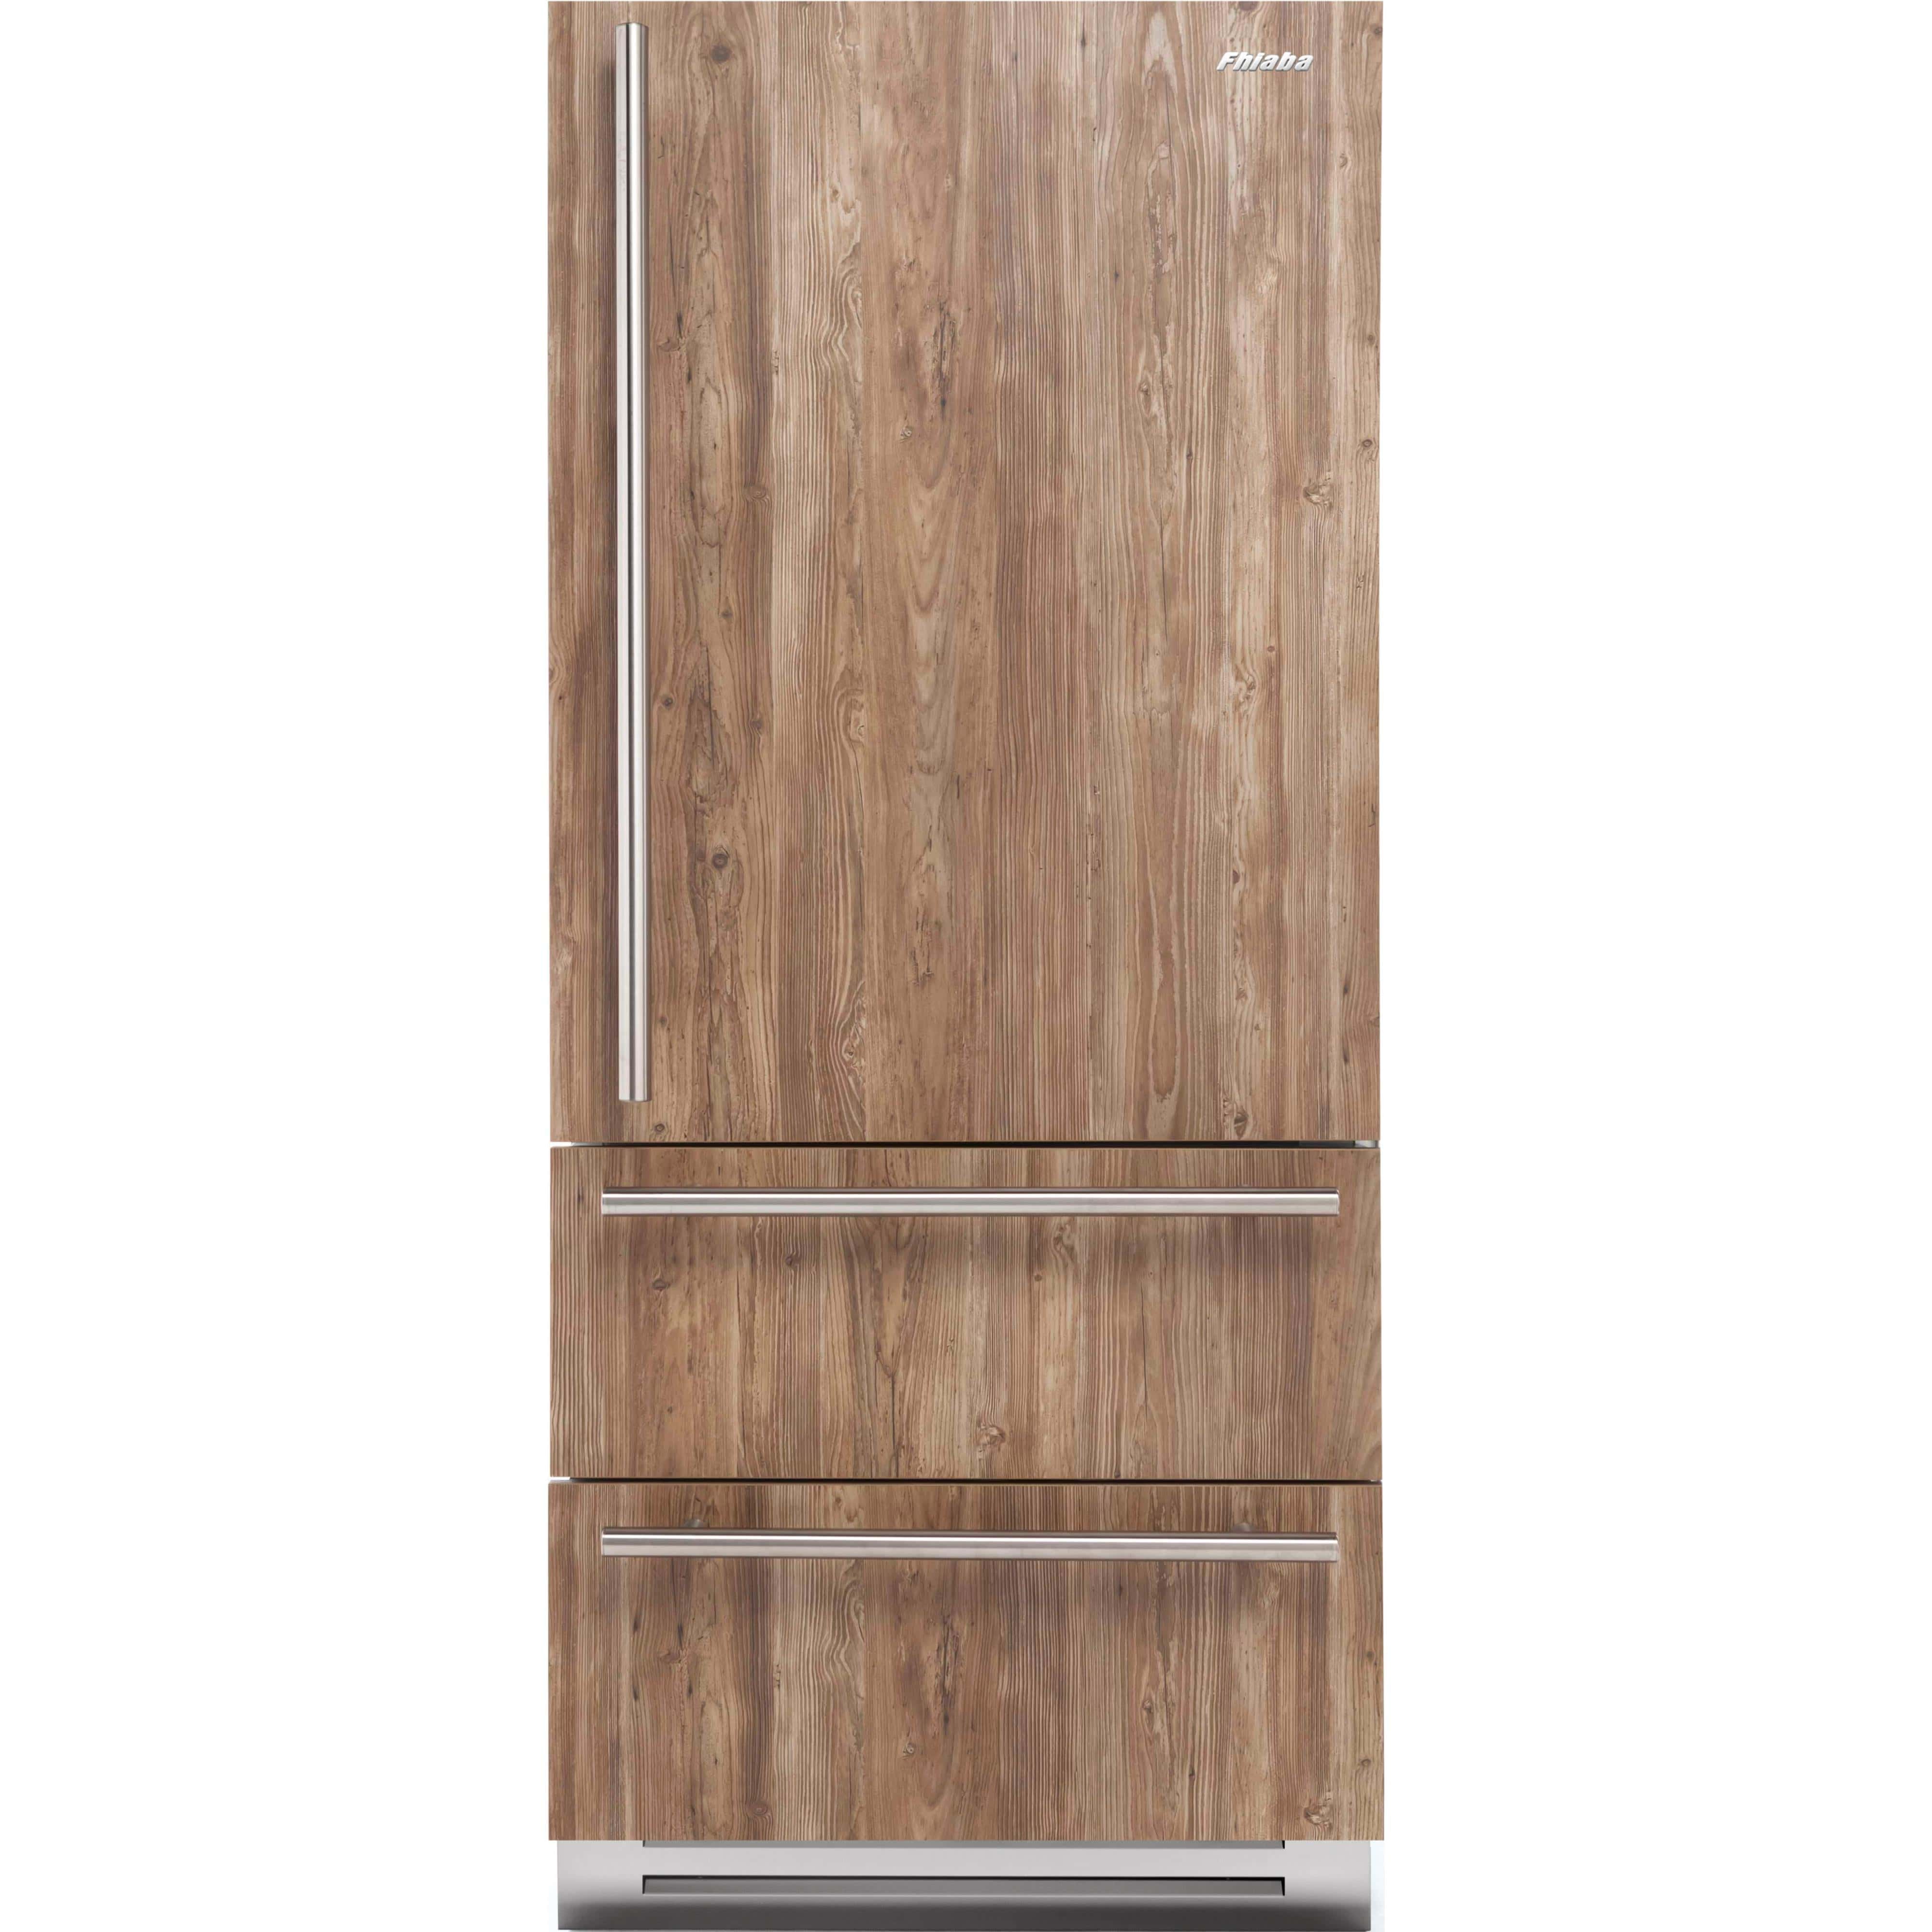 Fhiaba 36-inch Bottom Freezer Refrigerator FI36BDI-RO1 Refrigerators FI36BDIRO1 Luxury Appliances Direct